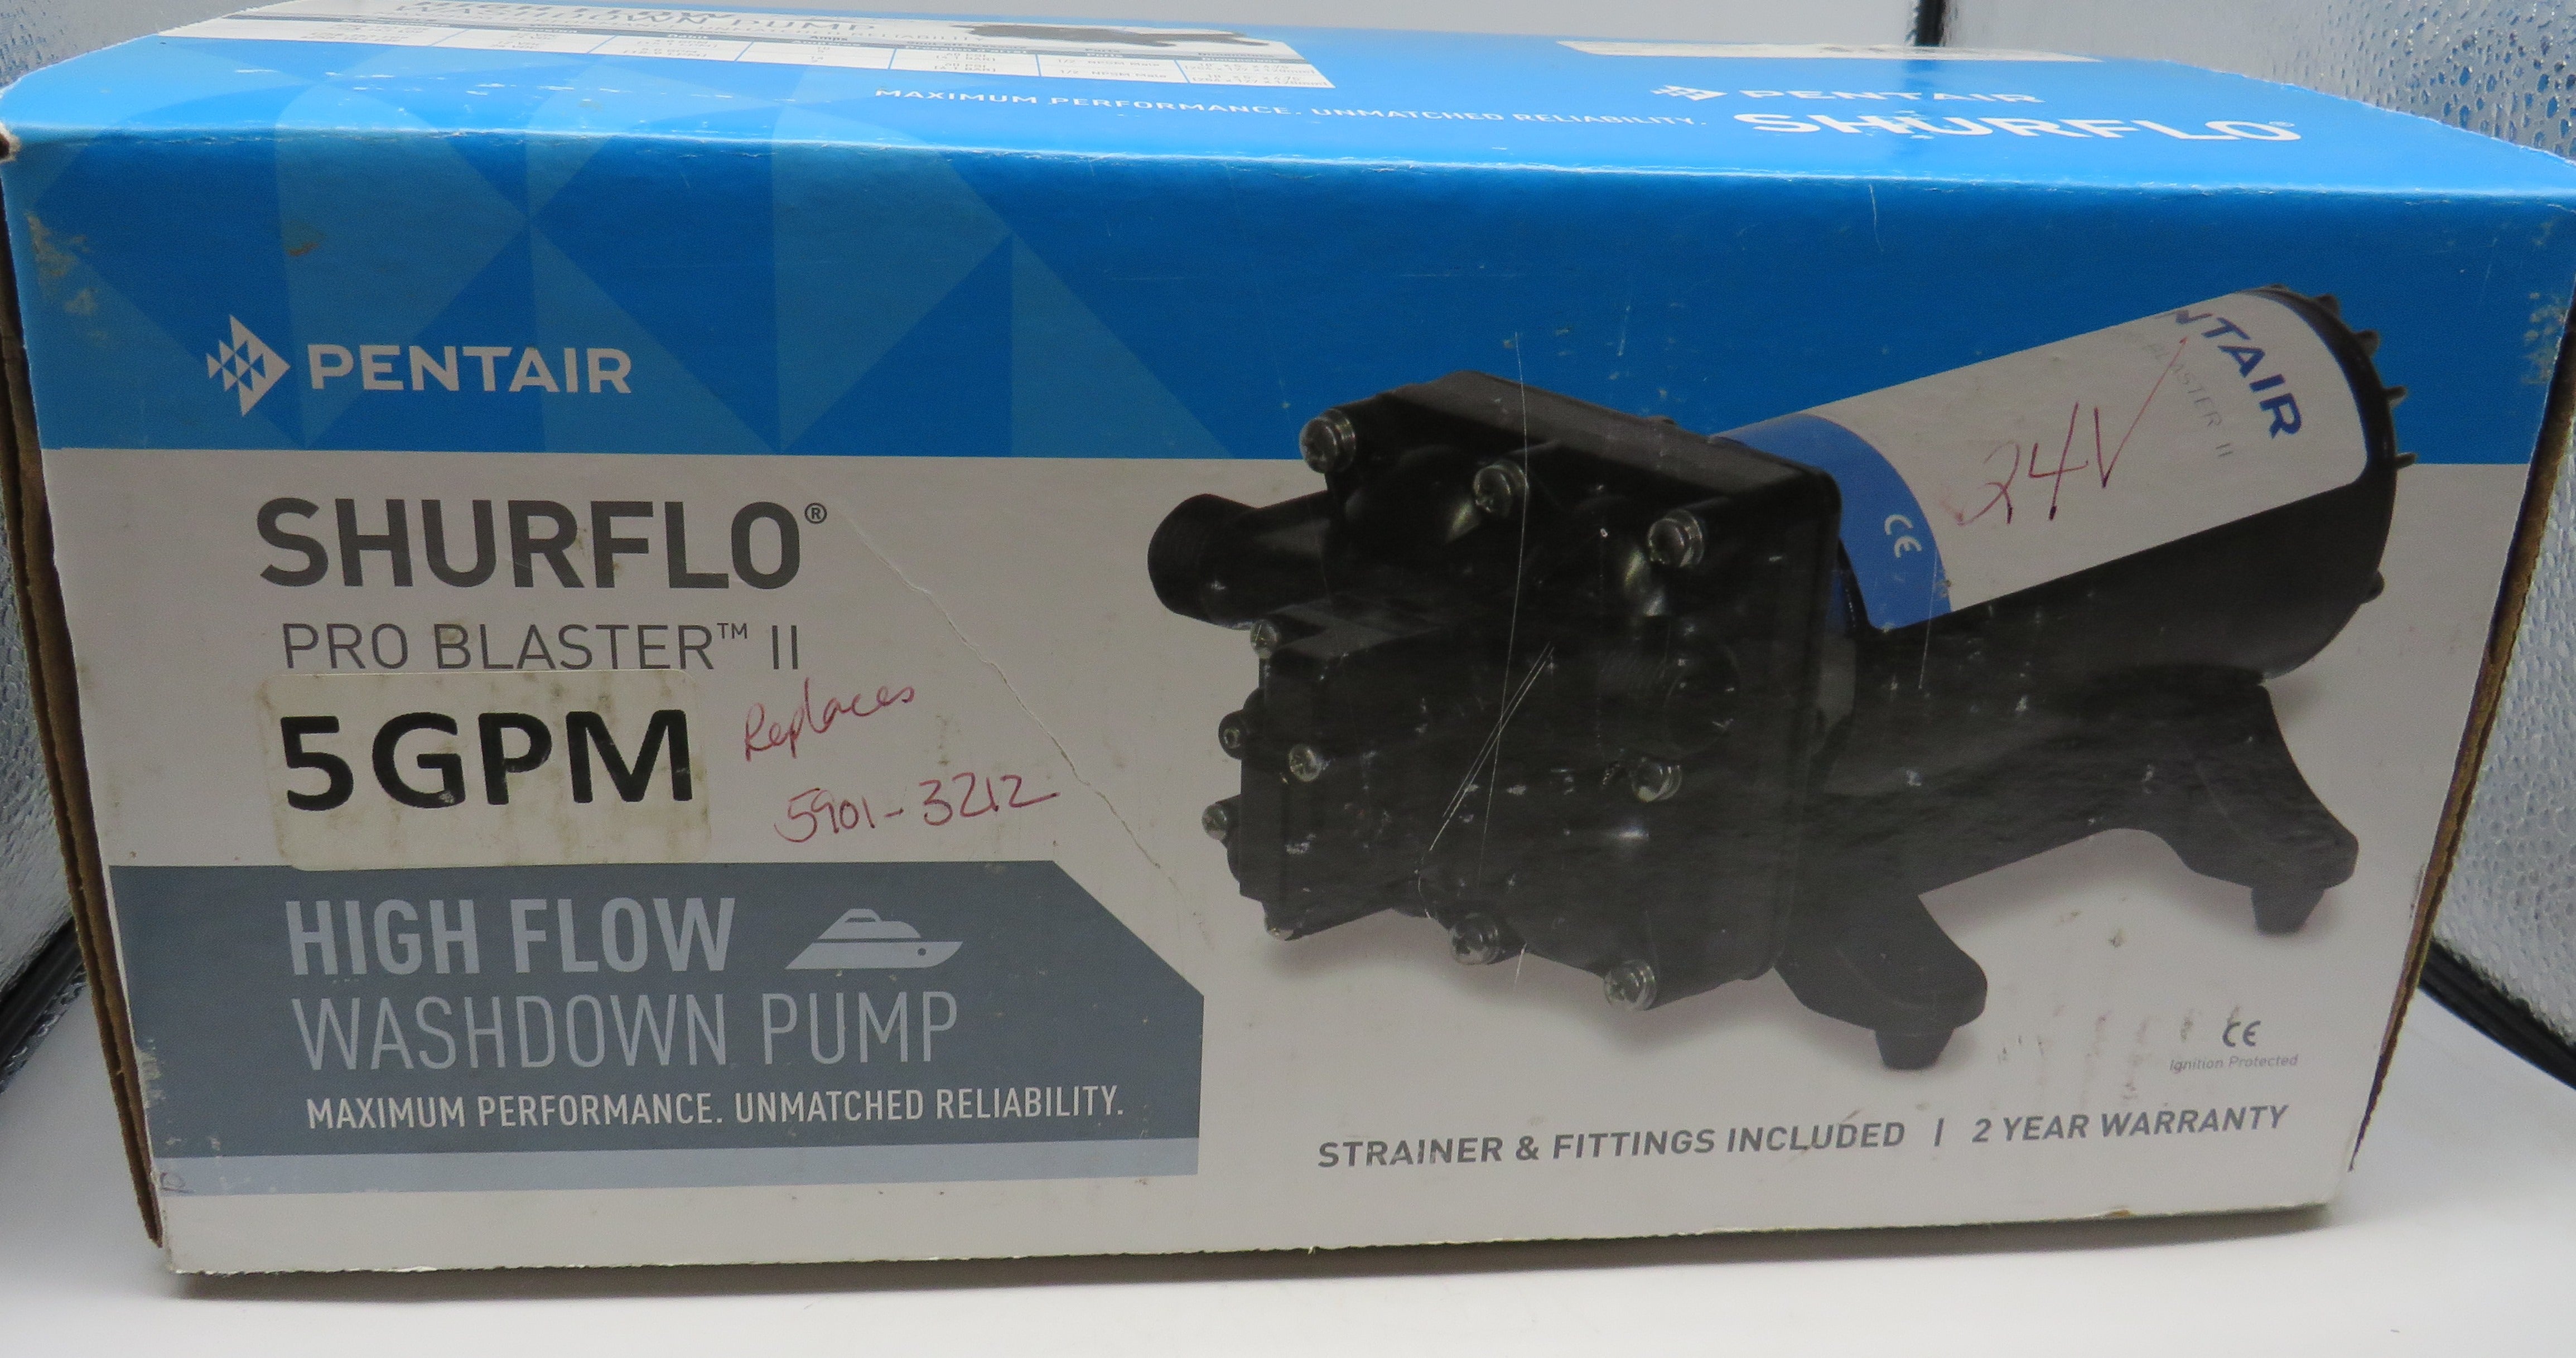 4258-163-E09 Shurflo 24V Problaster II Ultima High Flow Washdown Pump (Replaces 5901-3212) 5 GPM